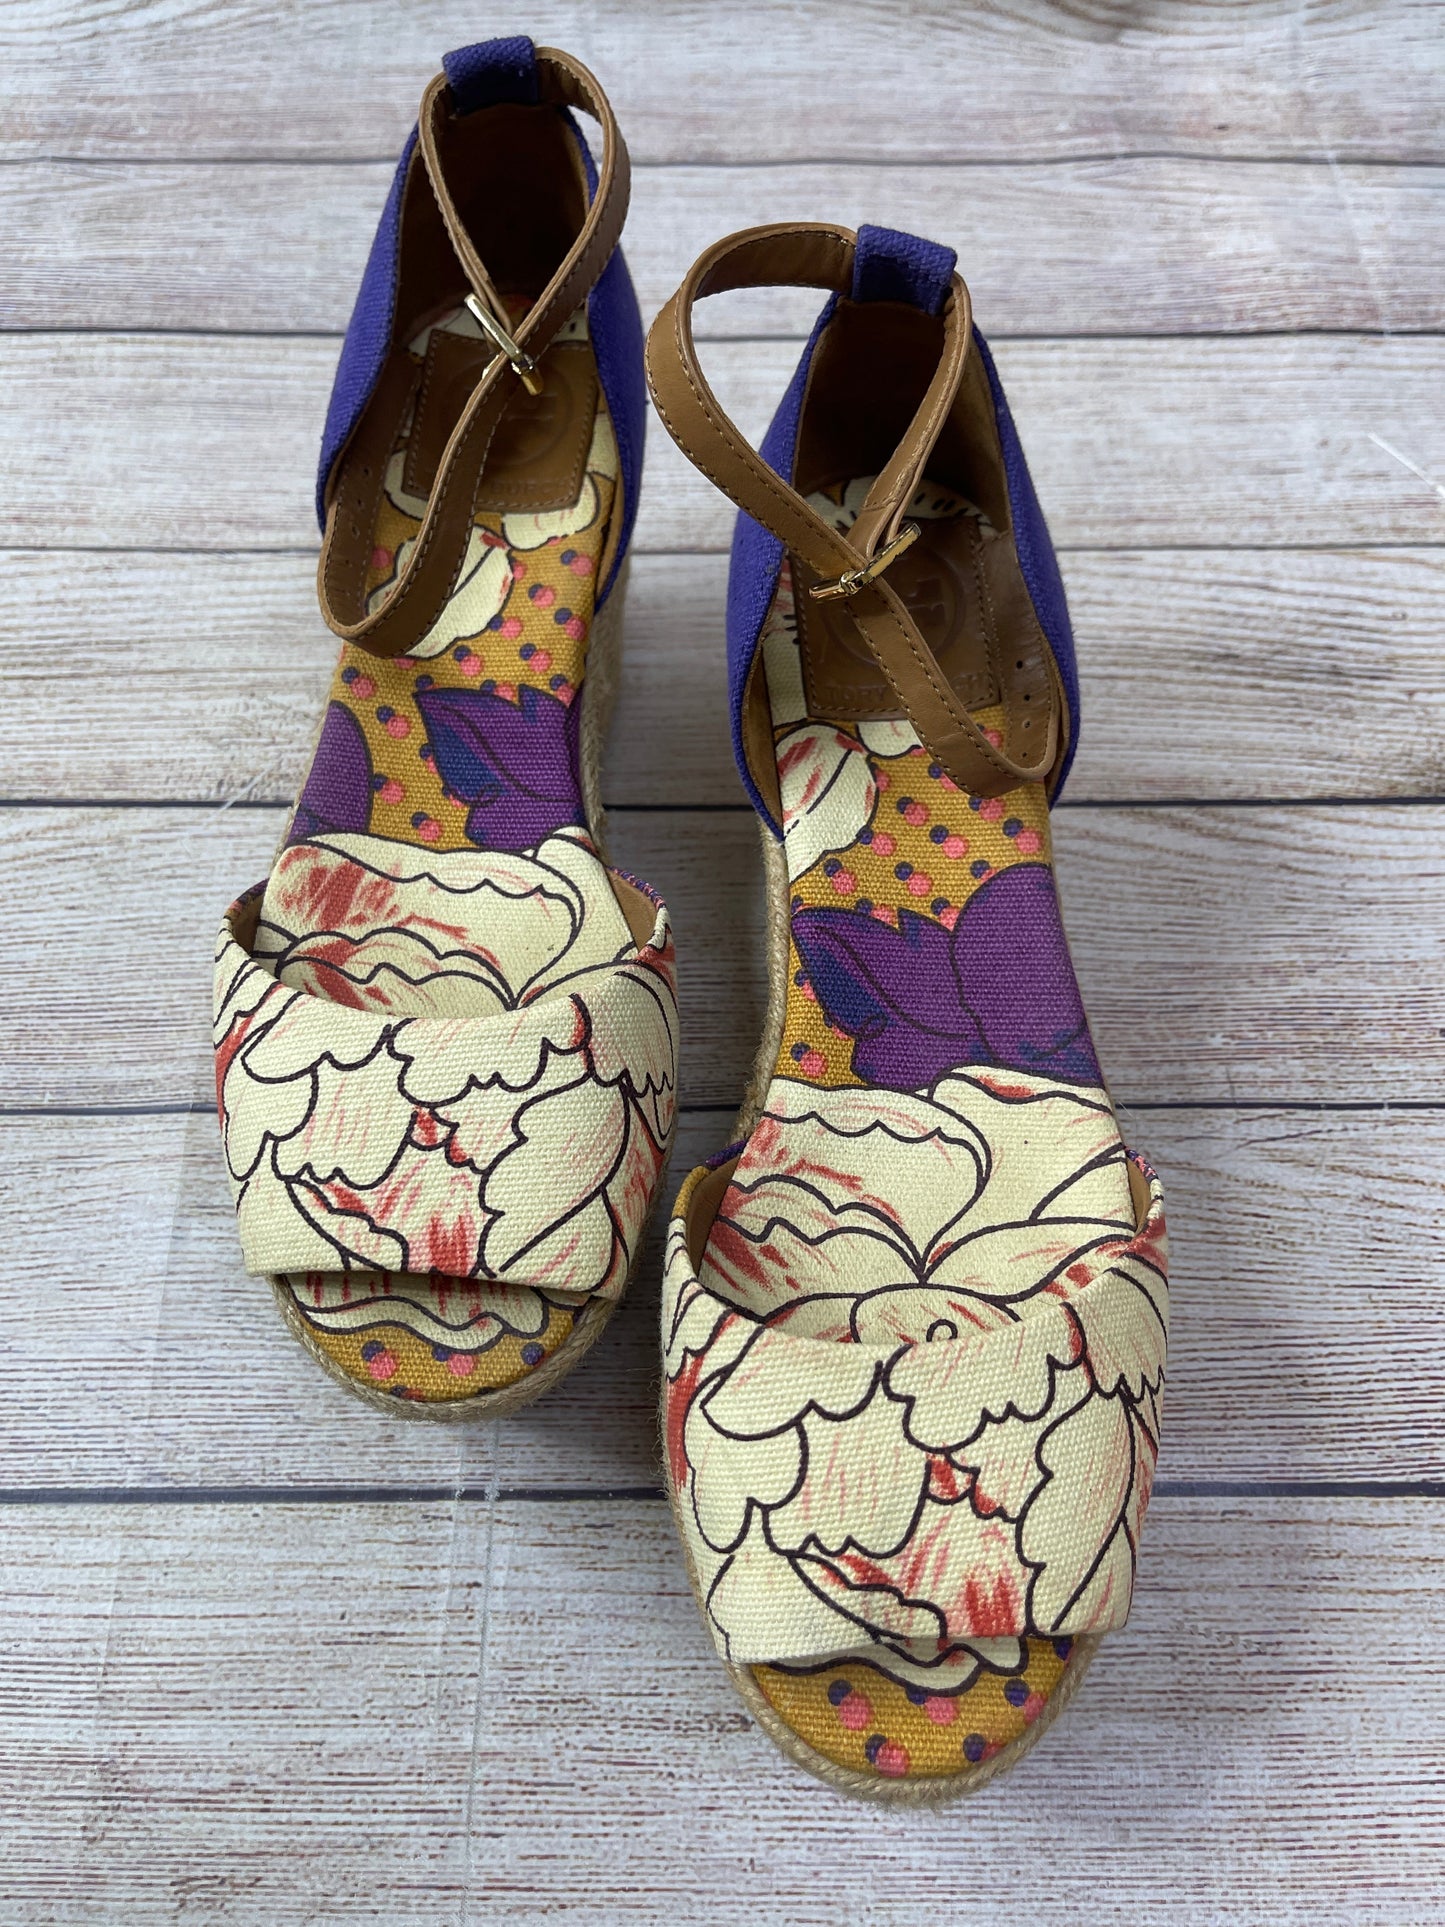 Floral Print Sandals Designer Tory Burch, Size 8